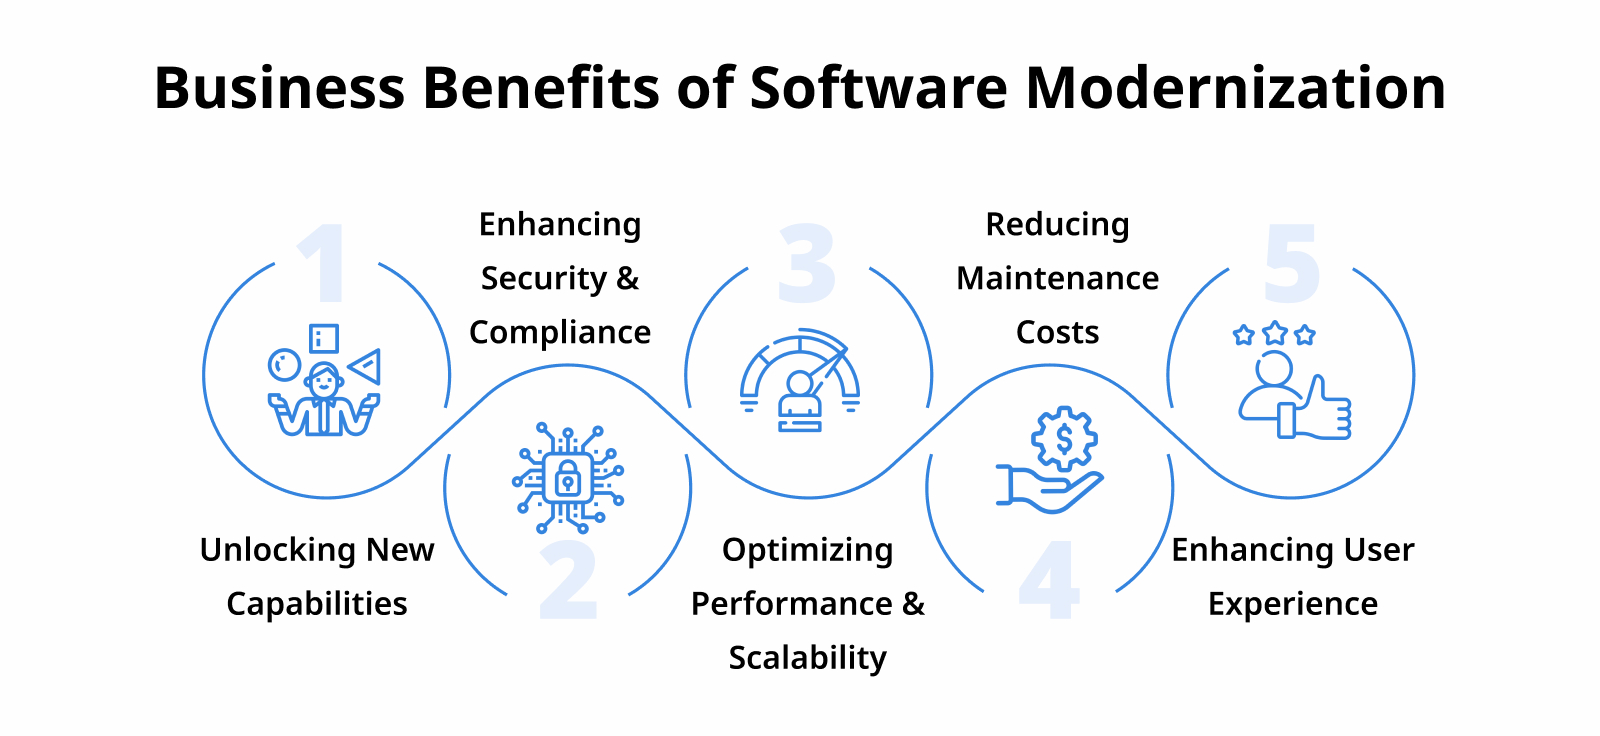 Business Benefits of Software Modernization